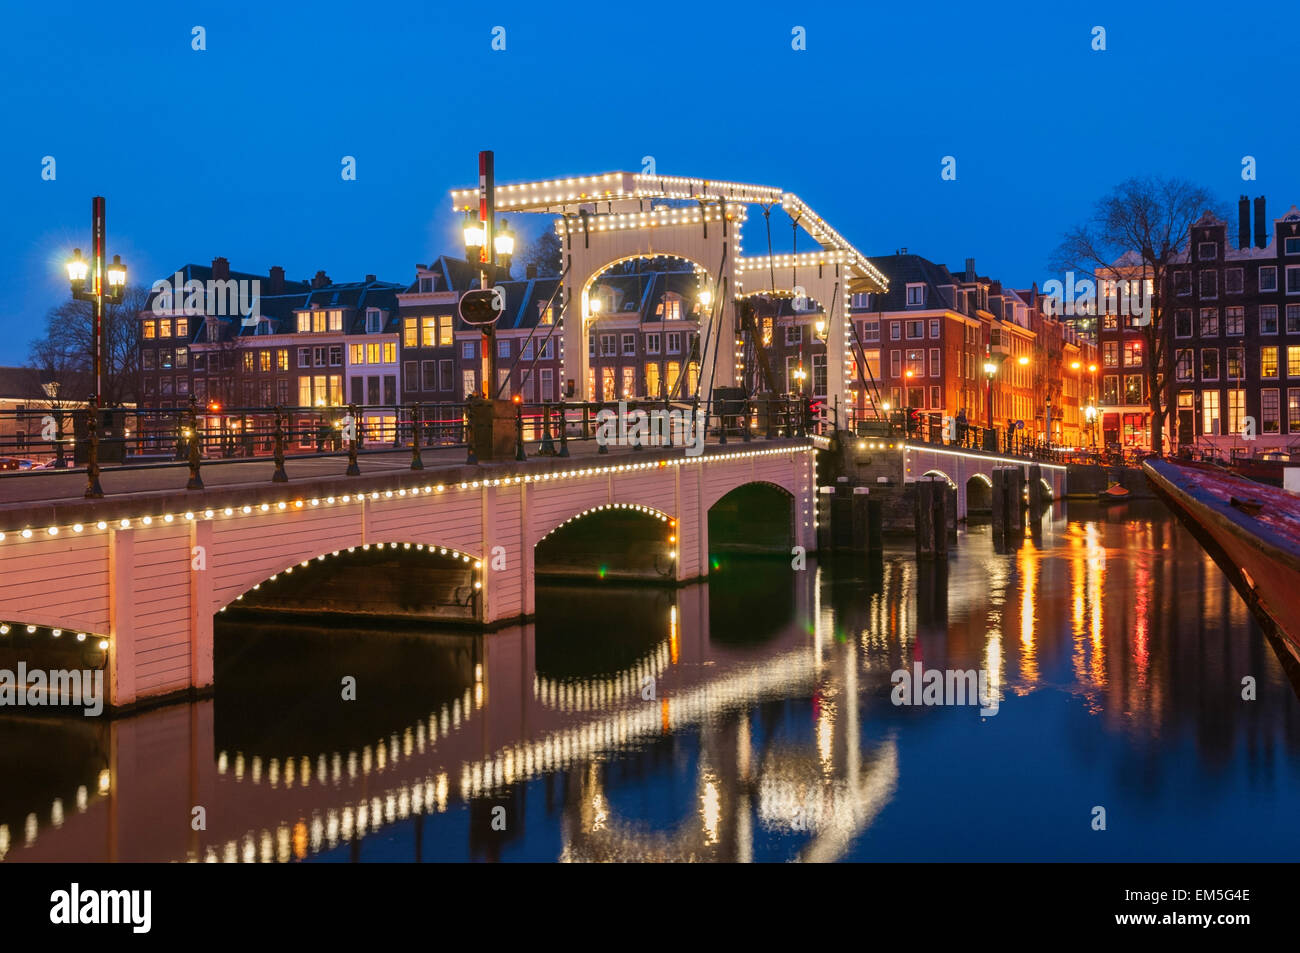 Magere Brug ou Skinny Bridge Amsterdam Pays-Bas Banque D'Images